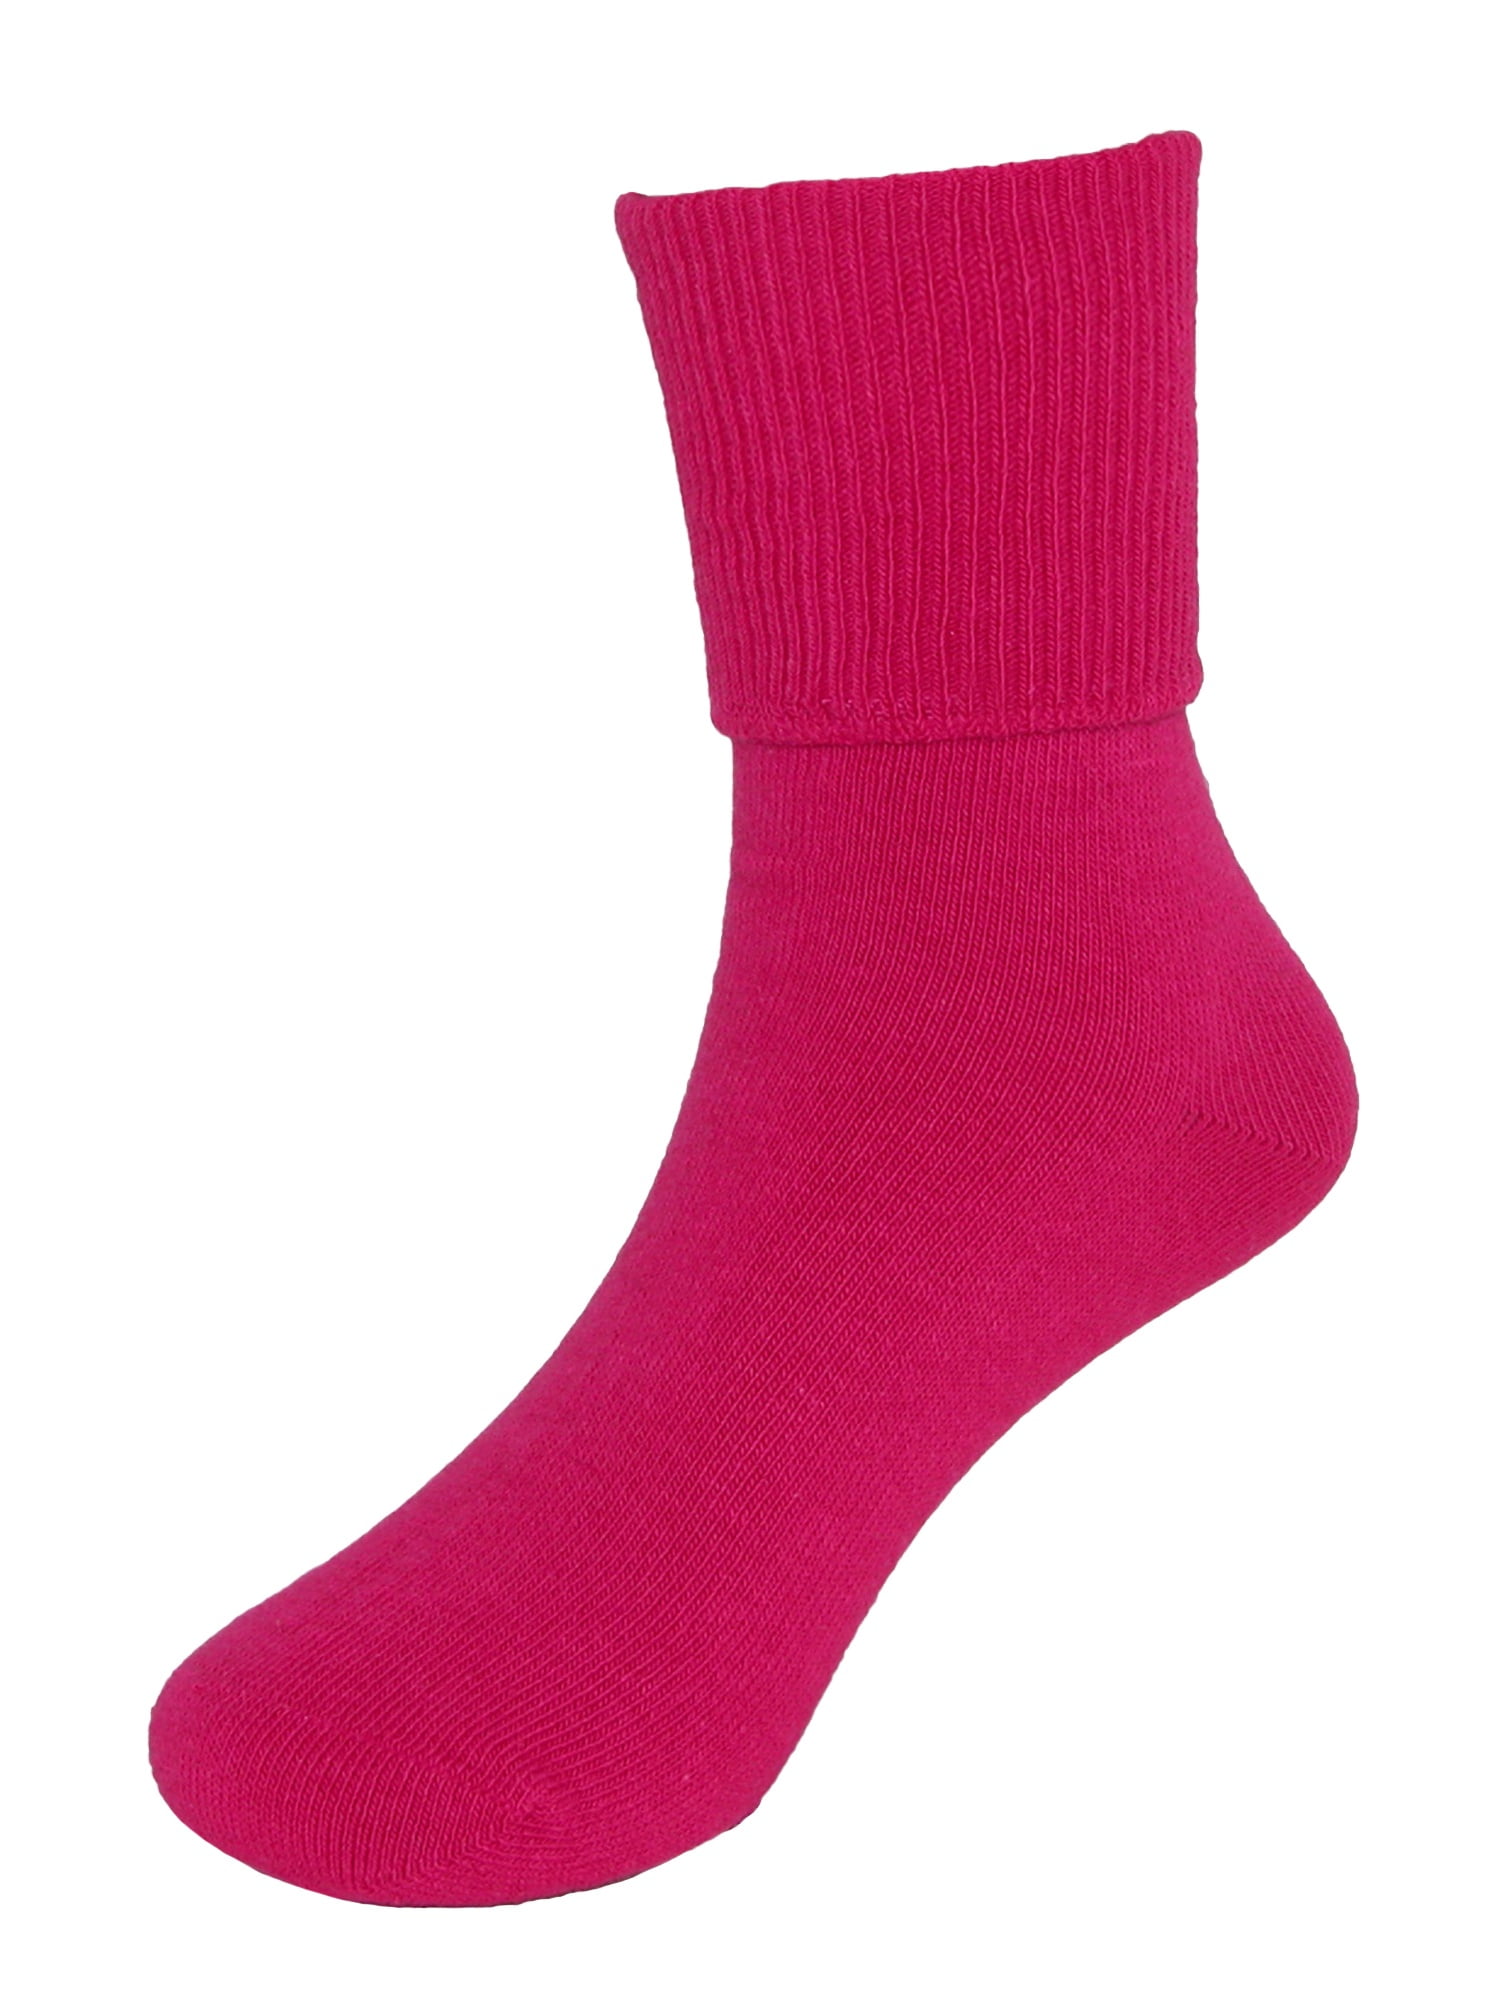 Girl's Seamless Turn Cuff Anklet Socks (6 Pair Pack) - Walmart.com